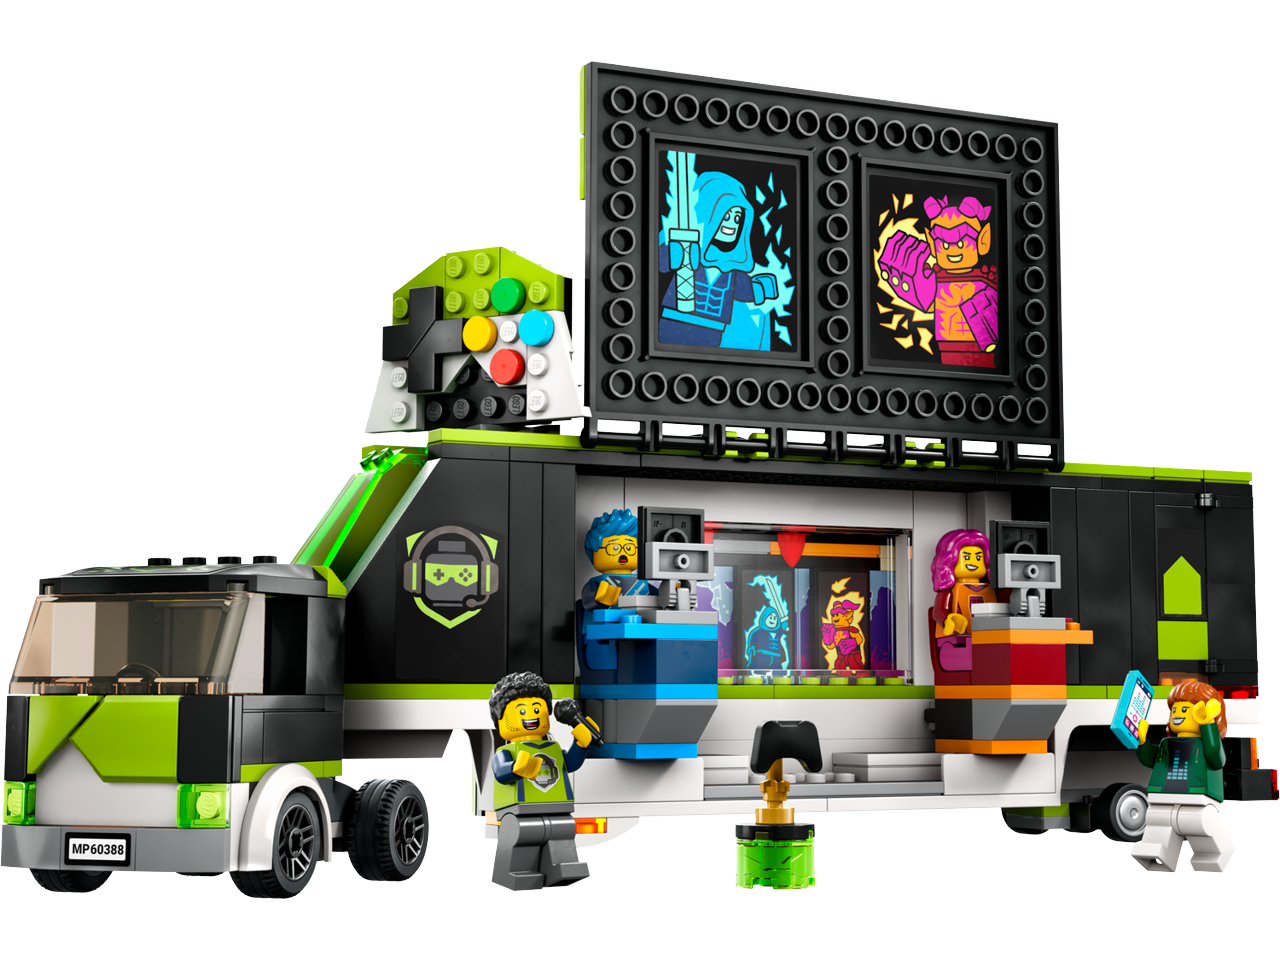 LEGO City - Gaming Tournament Truck (60388)